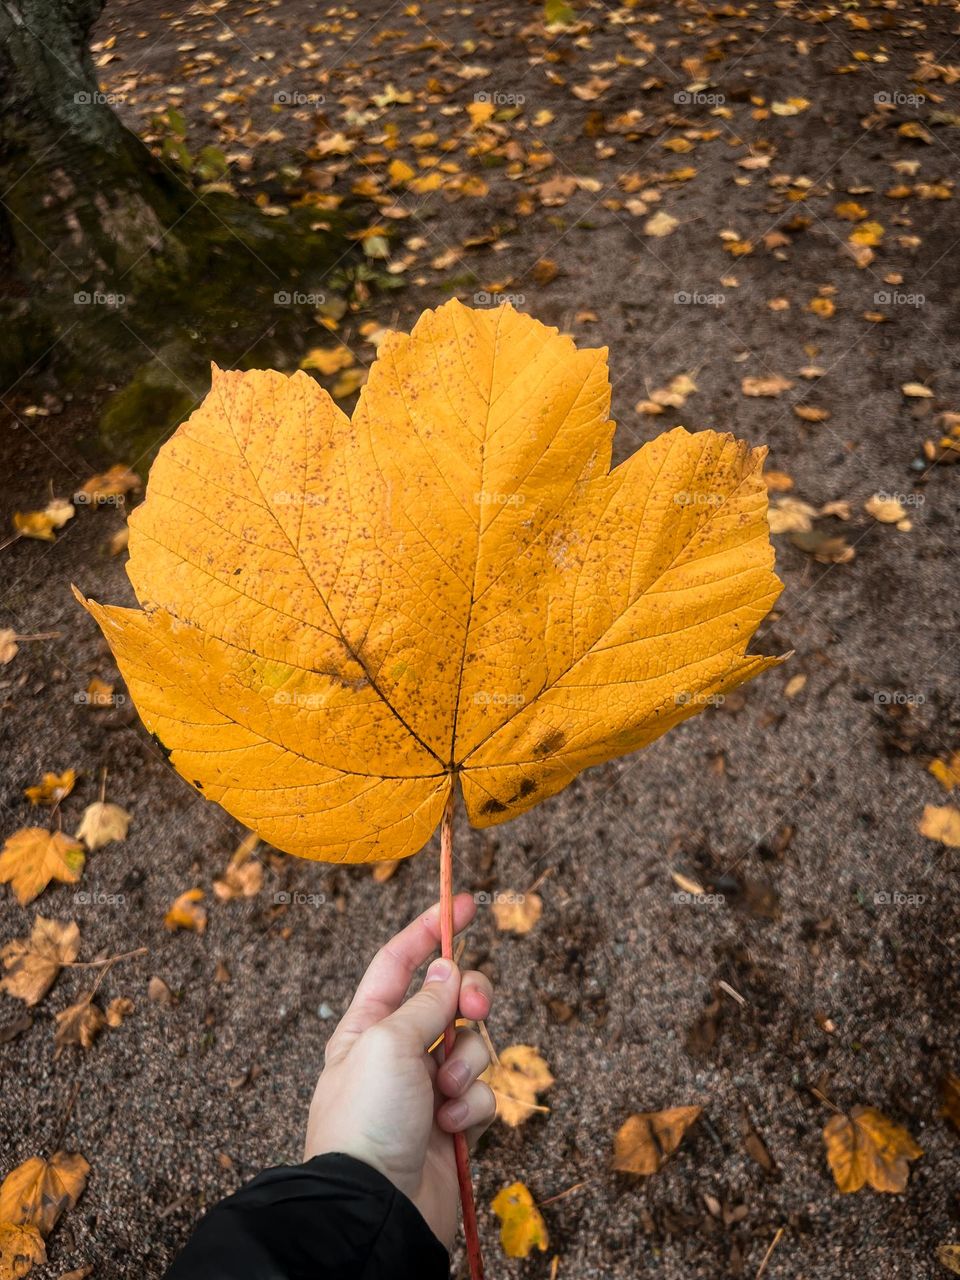 Big yellow leaf